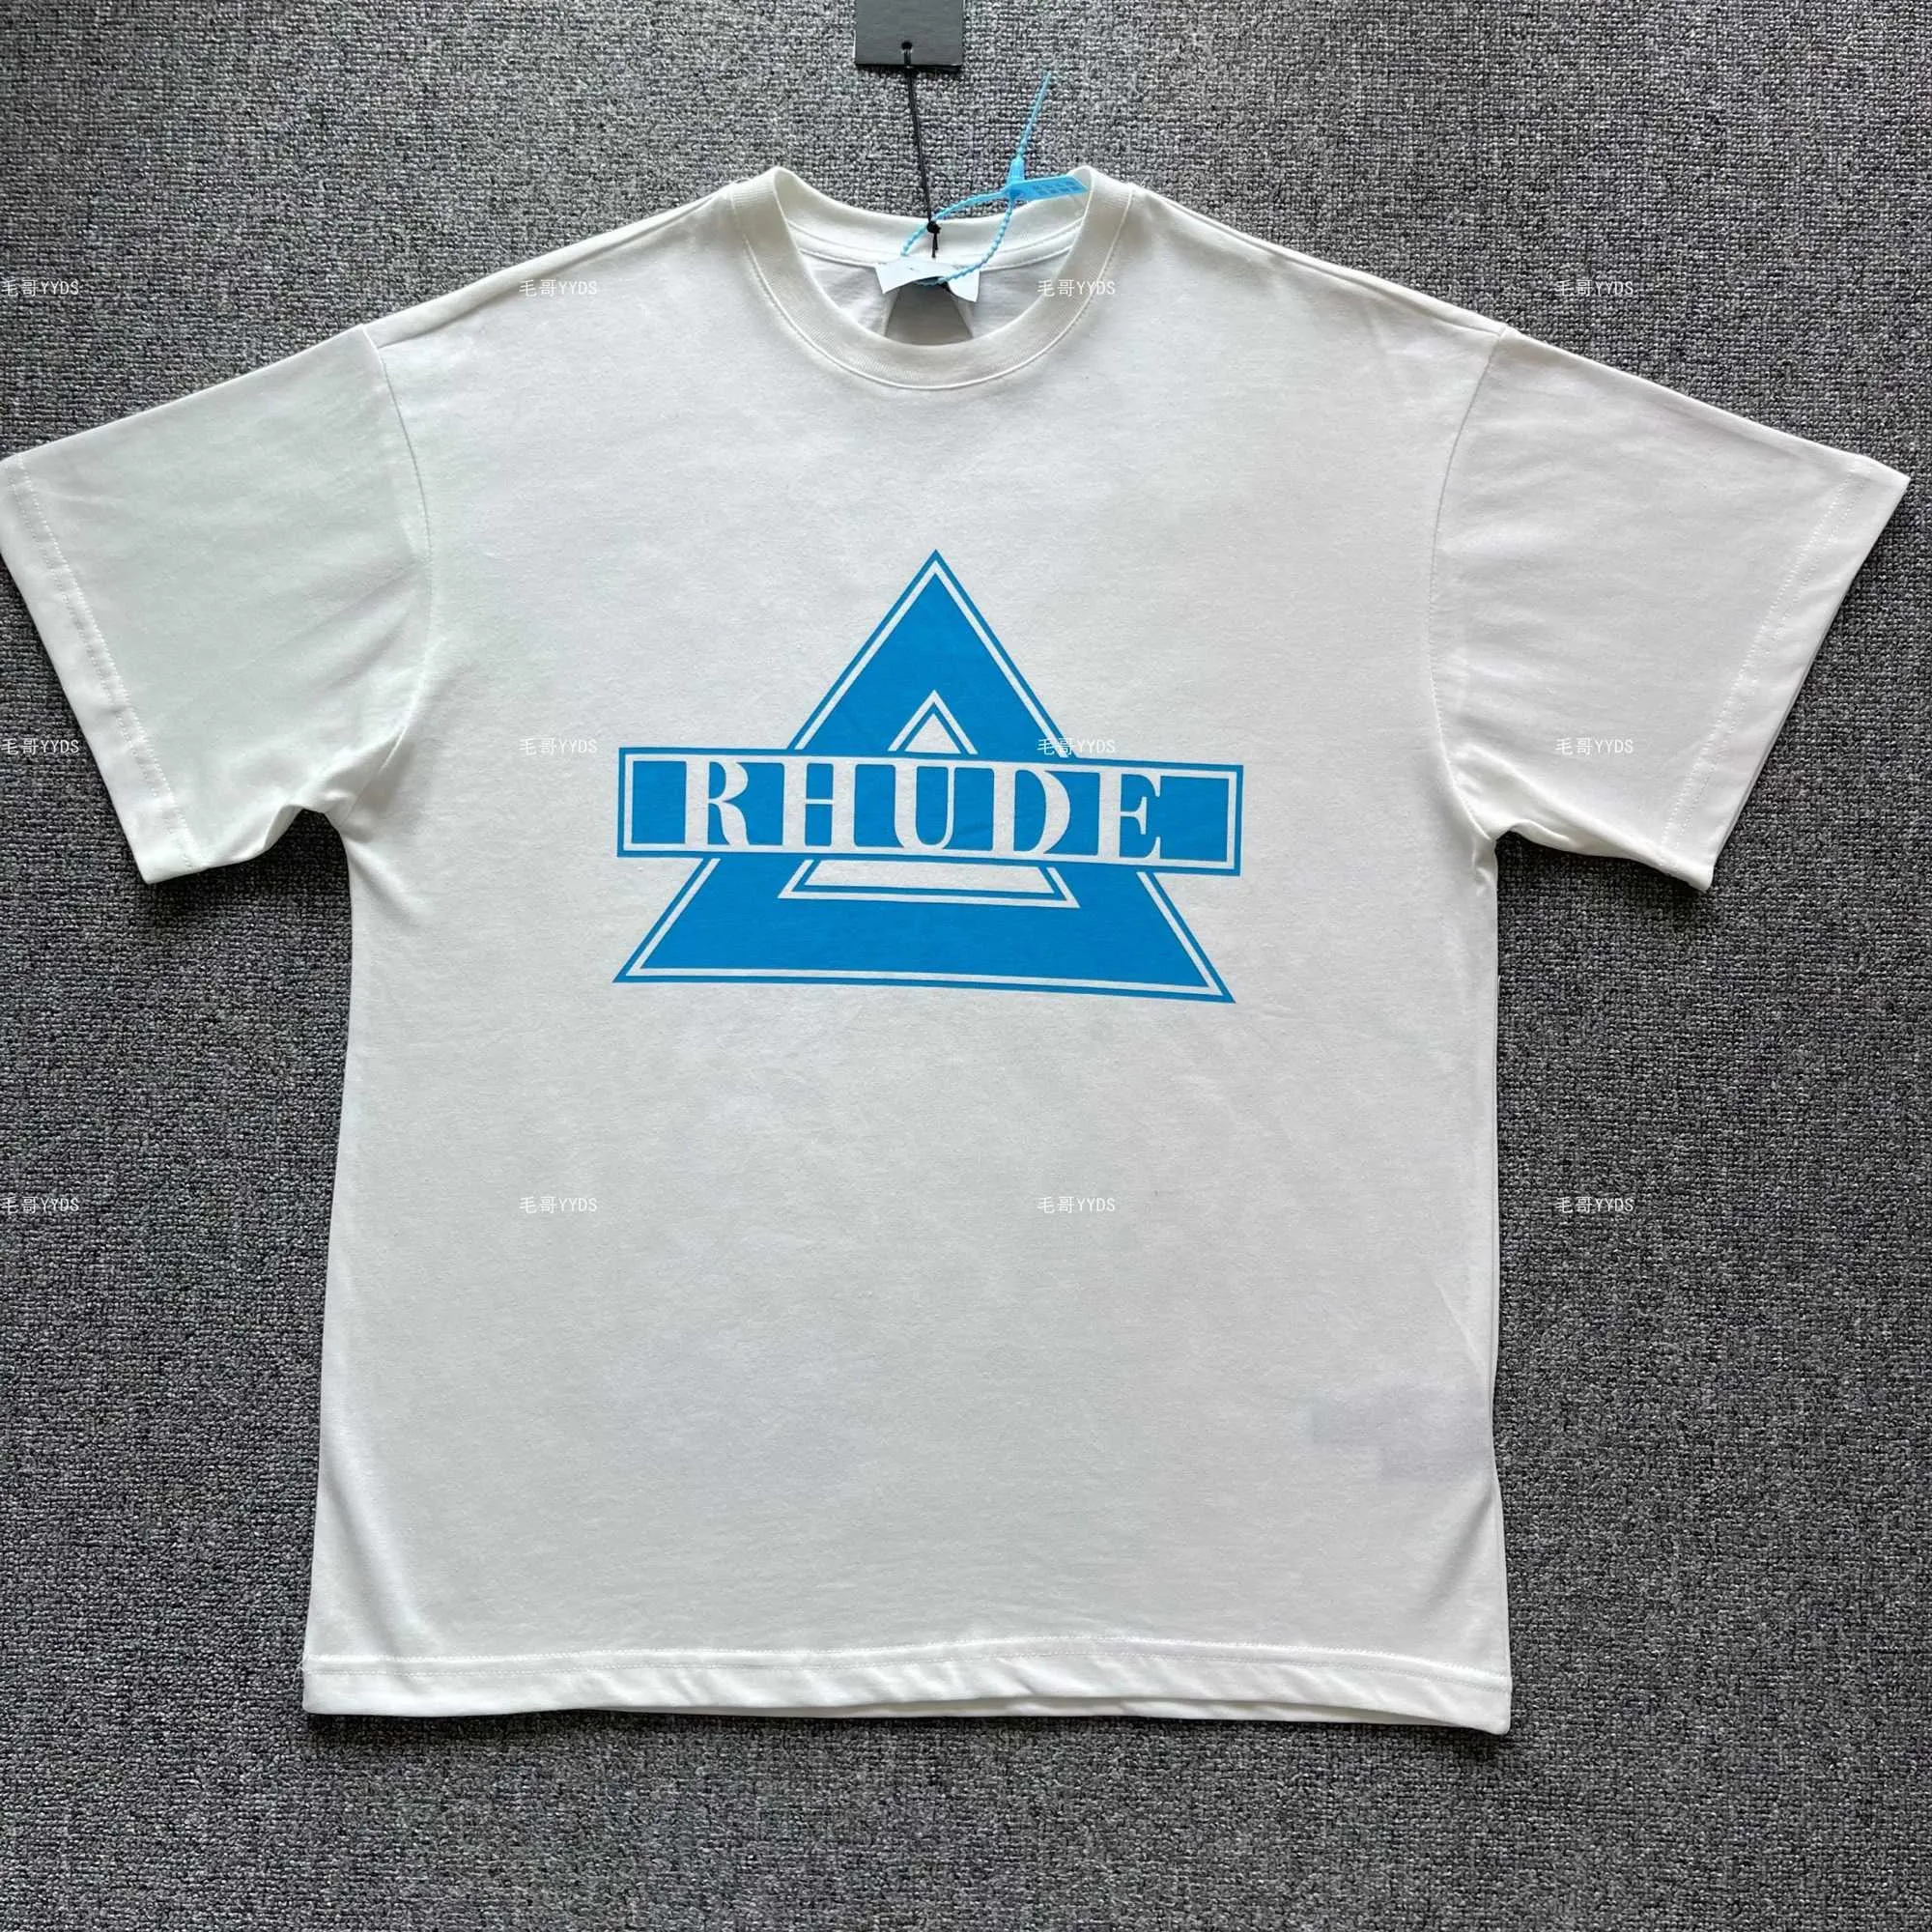 Designer Fashion Clothing Tees TShirts Rhude Blue Triangle Slogan Letter Printing Street T-shirt à manches courtes Tee Hommes WomenTops Streetwear Hip hop Sportswear